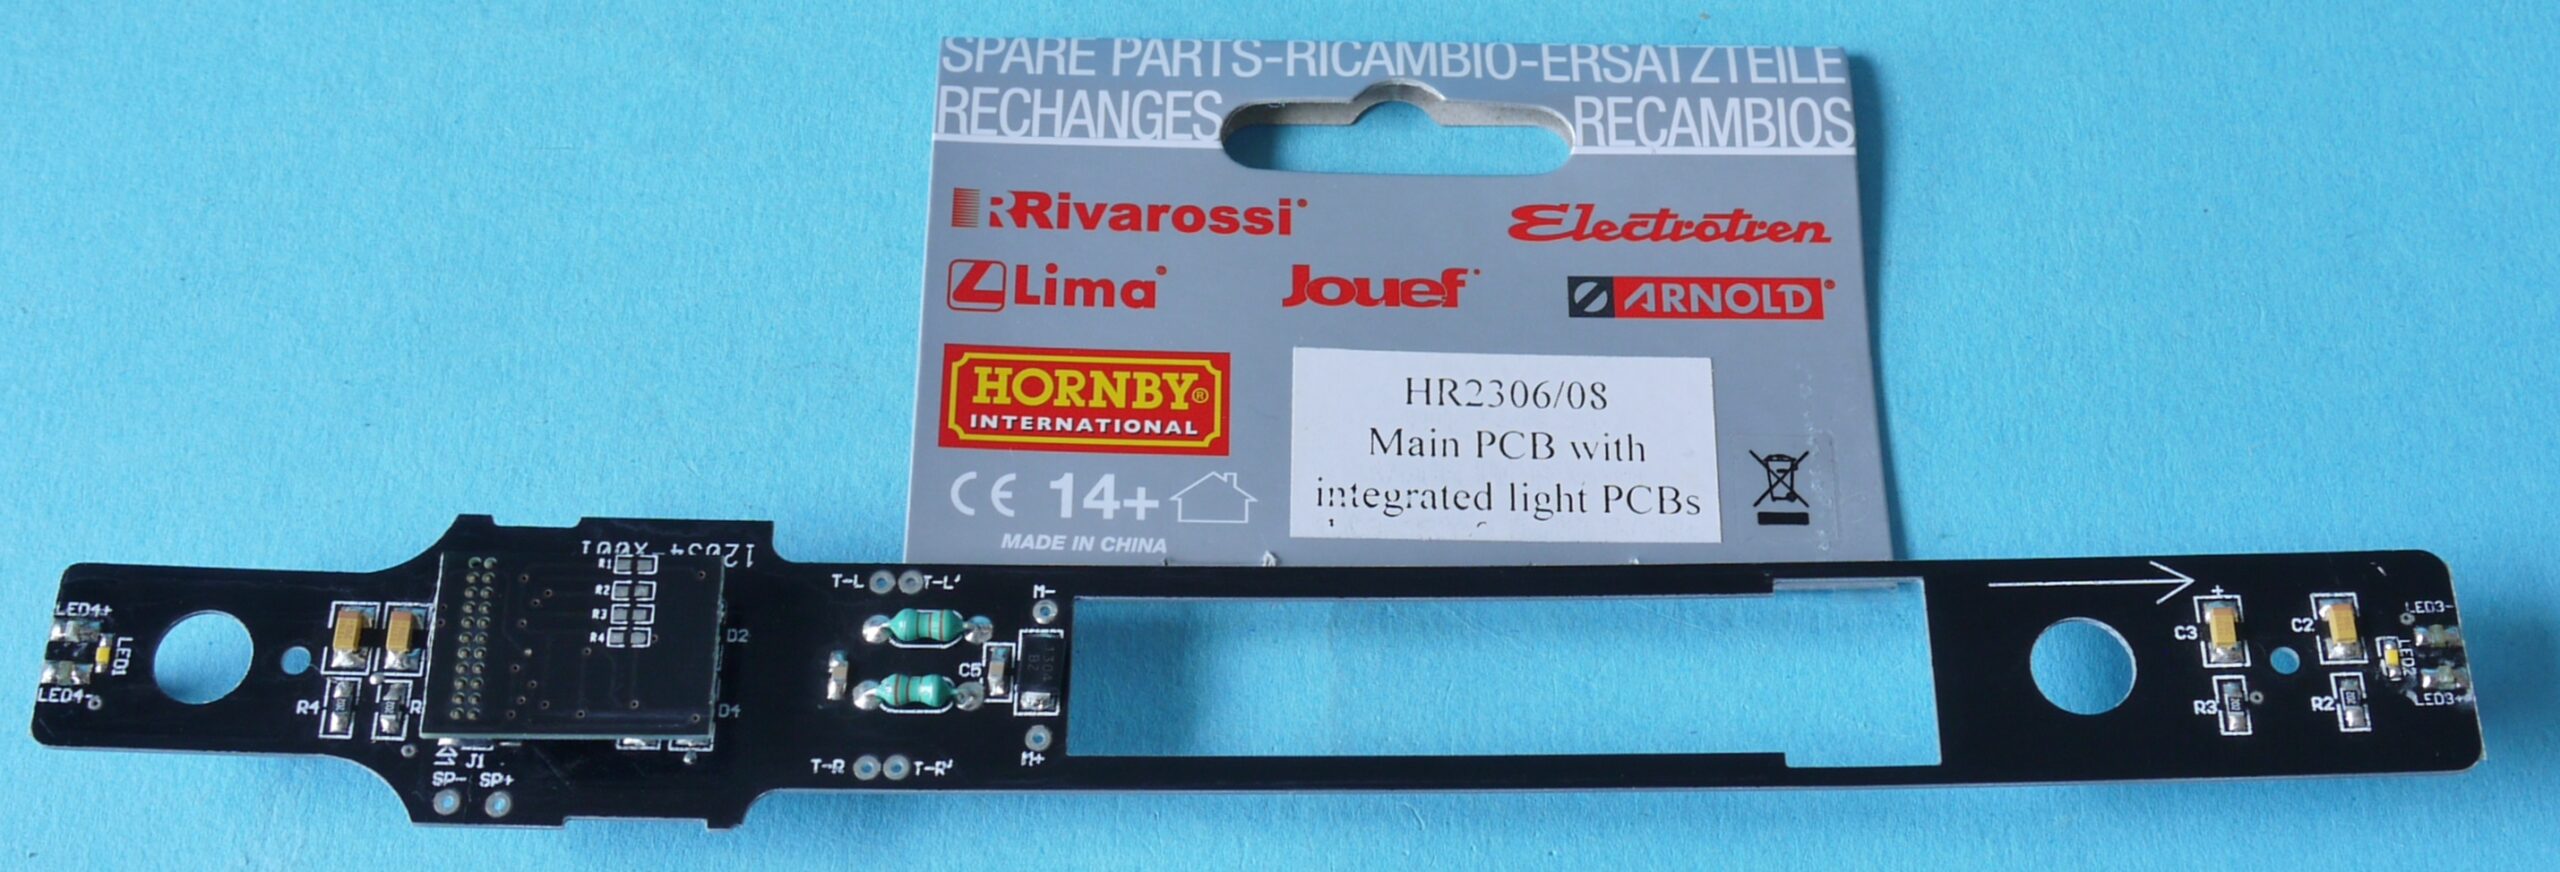 HR2306/08 Hornby Rivarossi Main + Lights PCBS High-Speed Steam DRG 61 002 IS28e